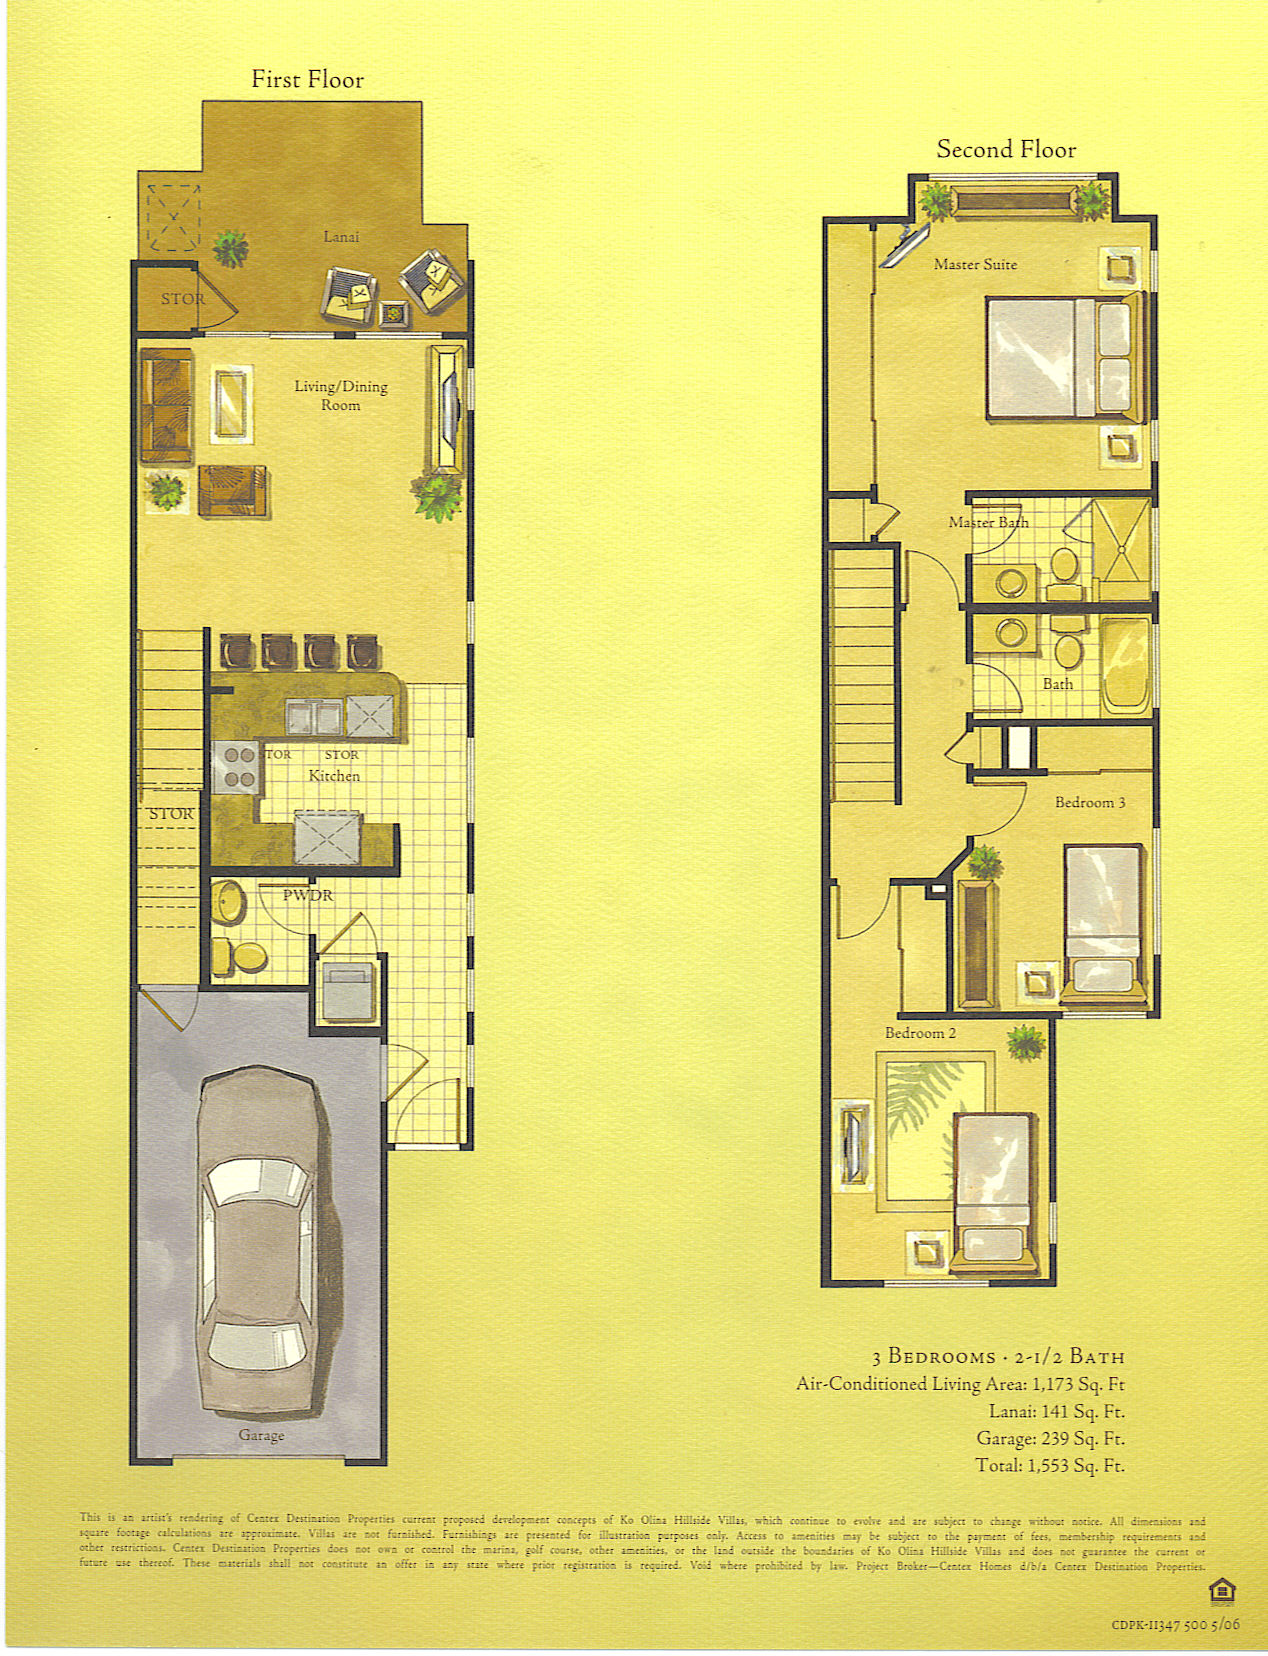 Living area - 1,173 sq. ft. Lanai - 141 sq. ft. Garage - 239 sq. ft. Total - 1,553 sq. ft.